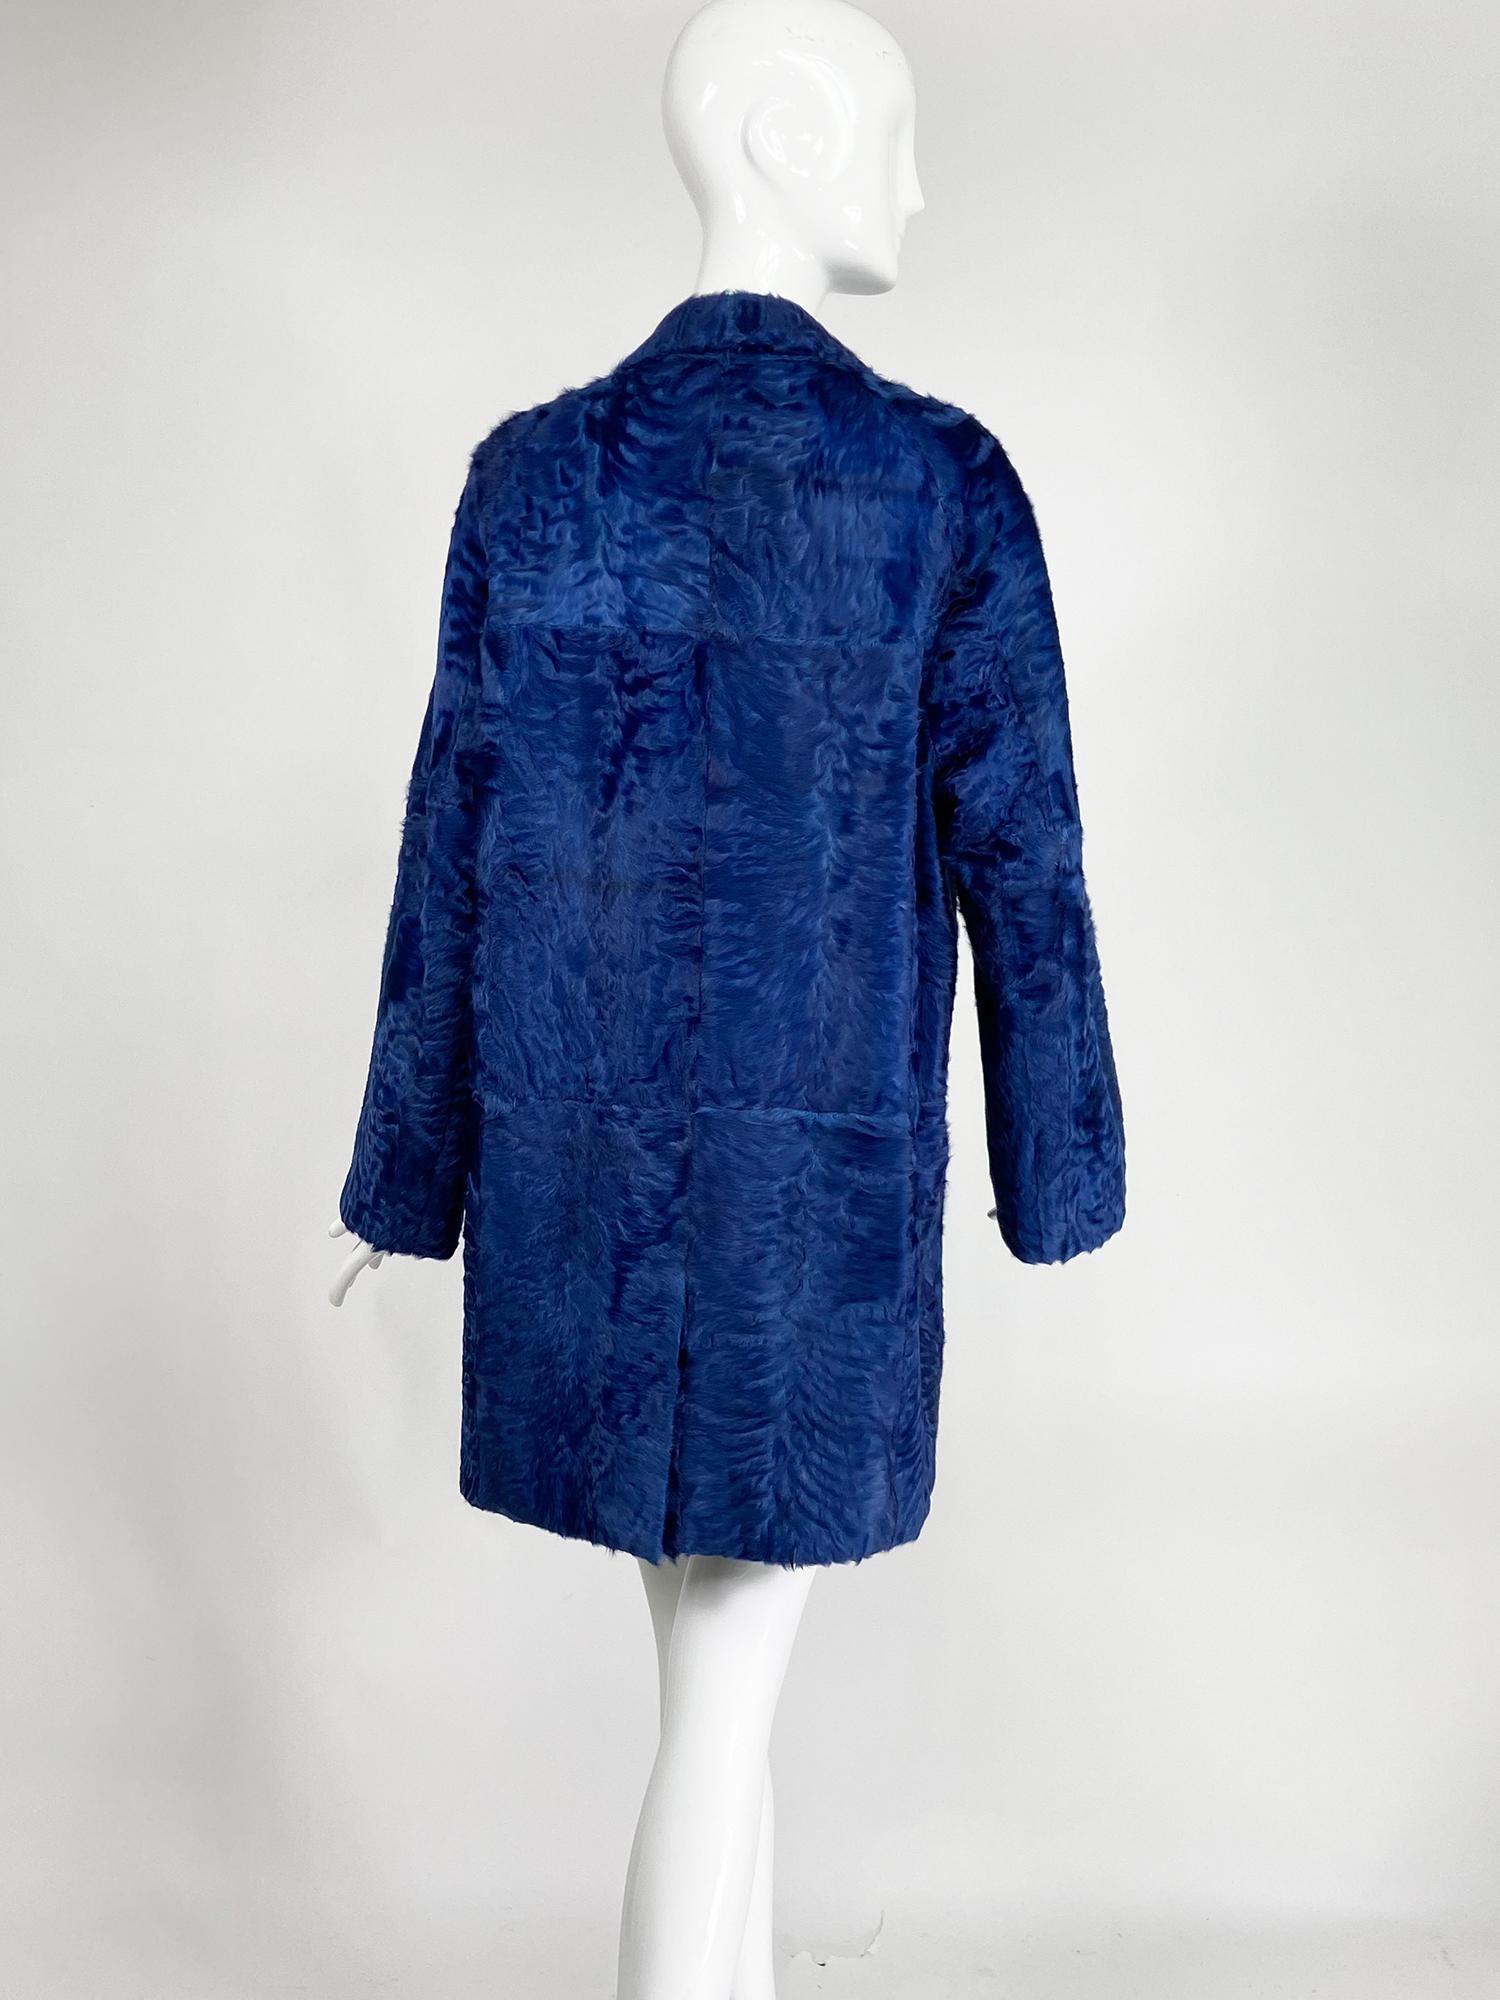 Yves Saint Laurent Rive Gauche Blue Sheared Lamb Coat 1